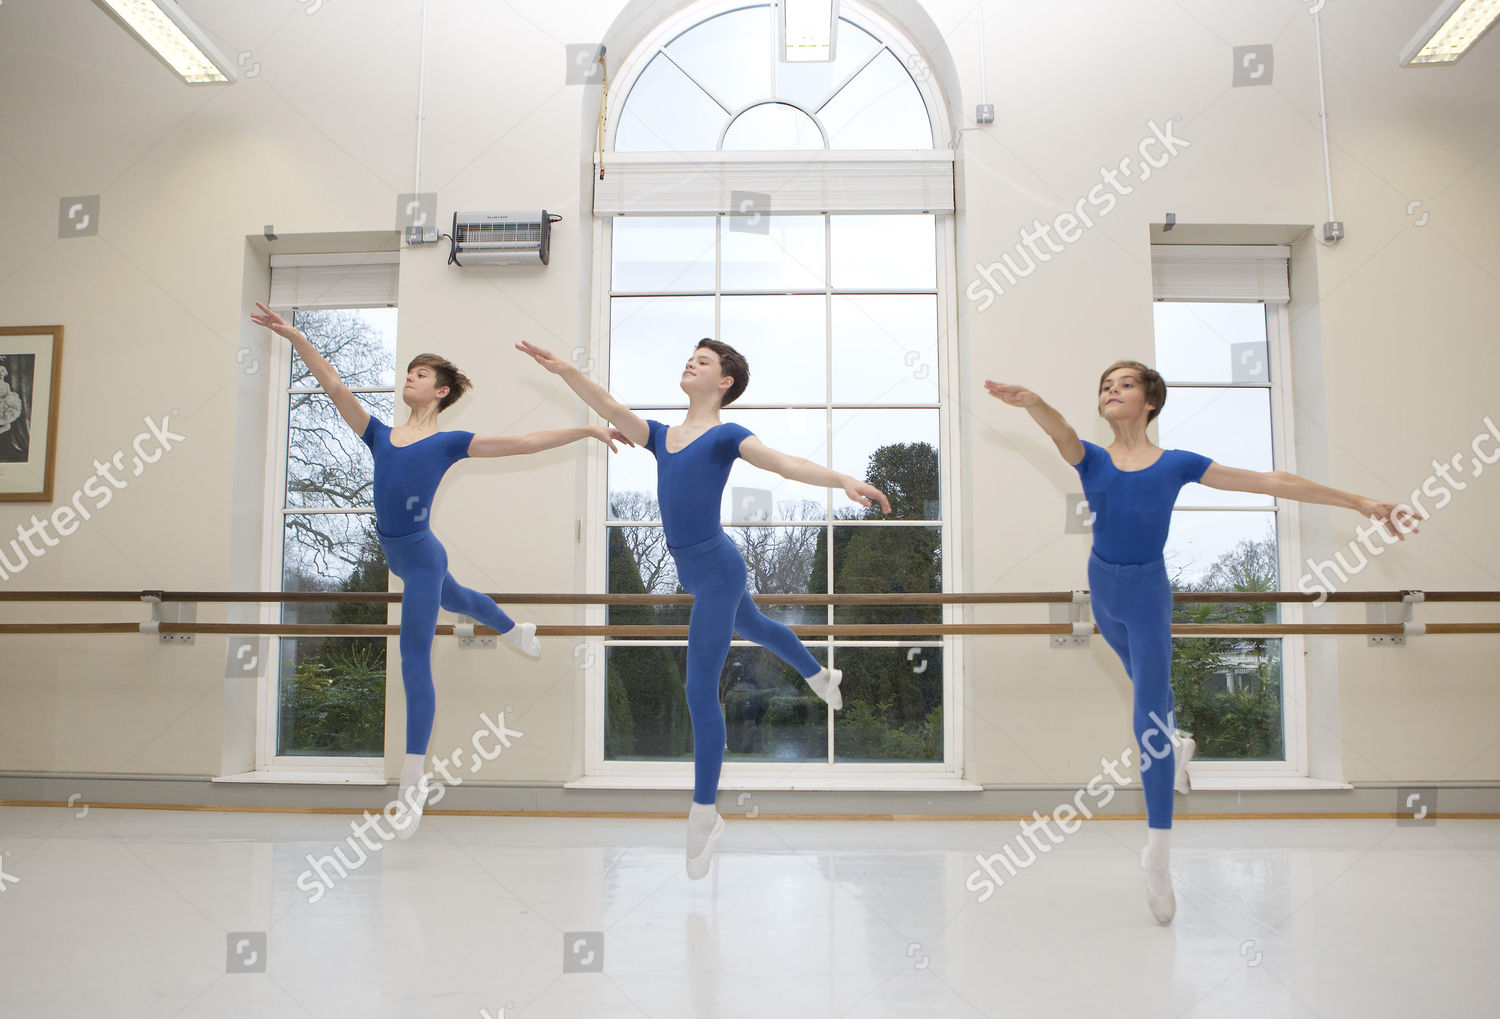 Royal Ballet School Male Pupils Lr Stanley Foto Editorial En Stock Imagen En Stock Shutterstock - soy bailarina academia de ballet roblox royal ballet